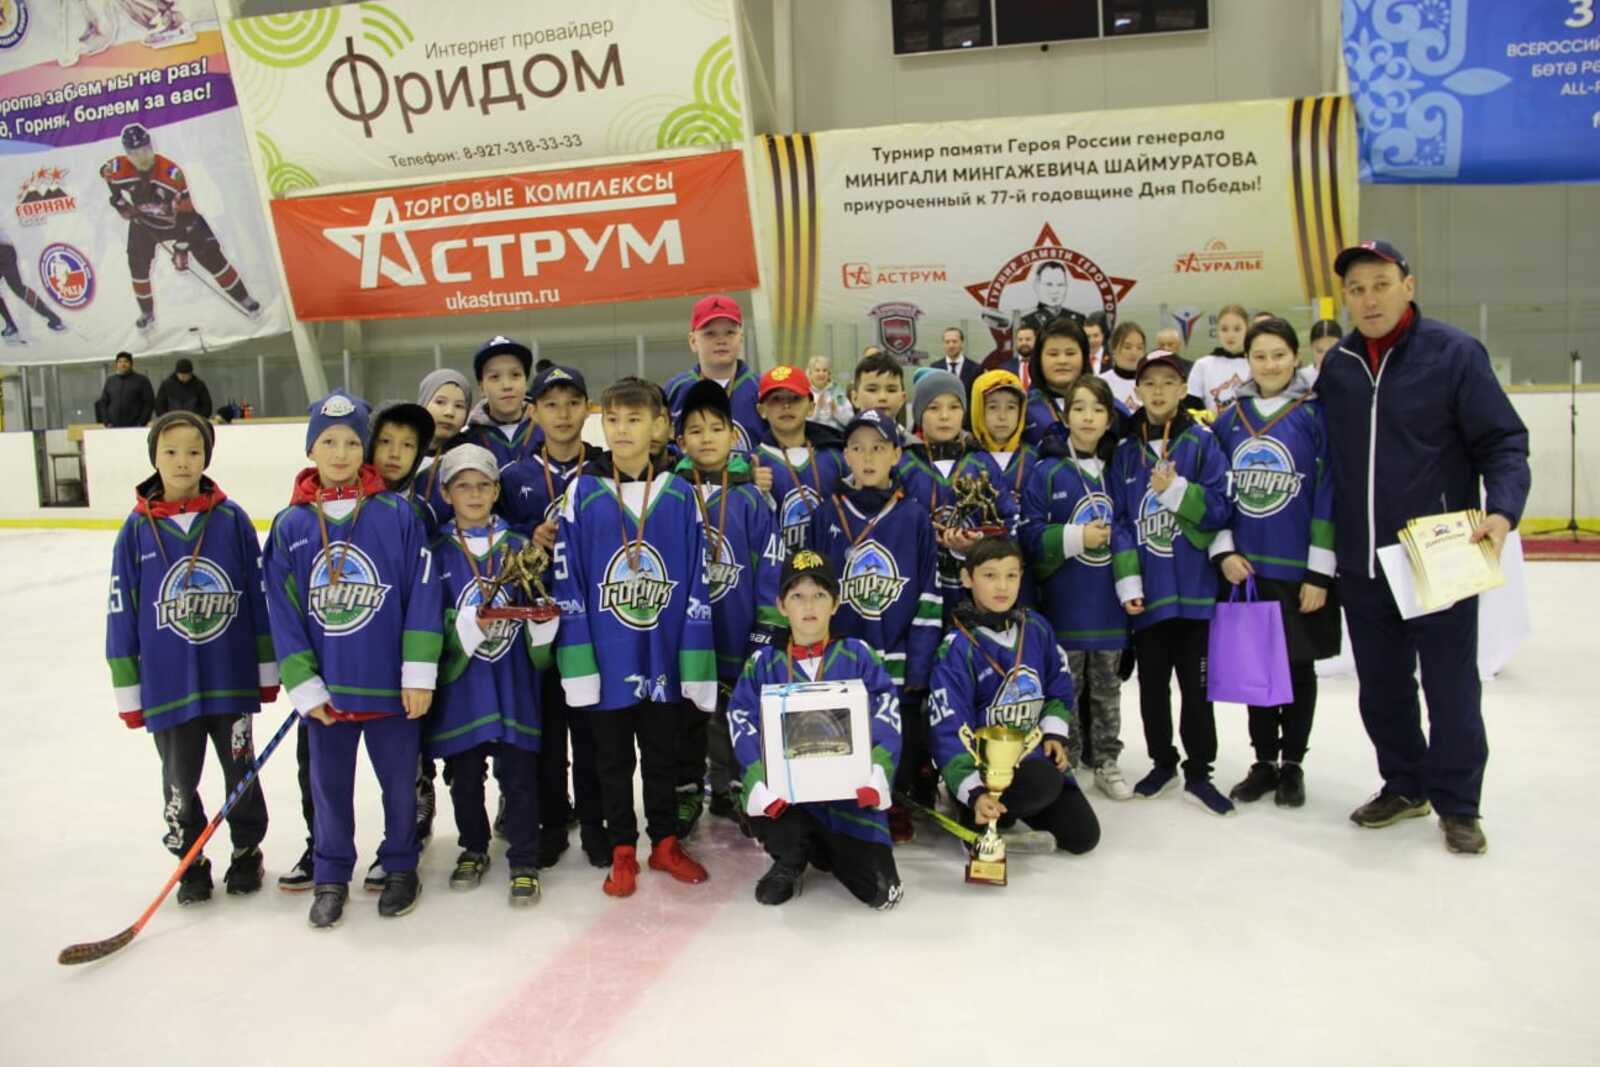 Сибайҙа - Шайморатов иҫтәлегенә хоккей турниры